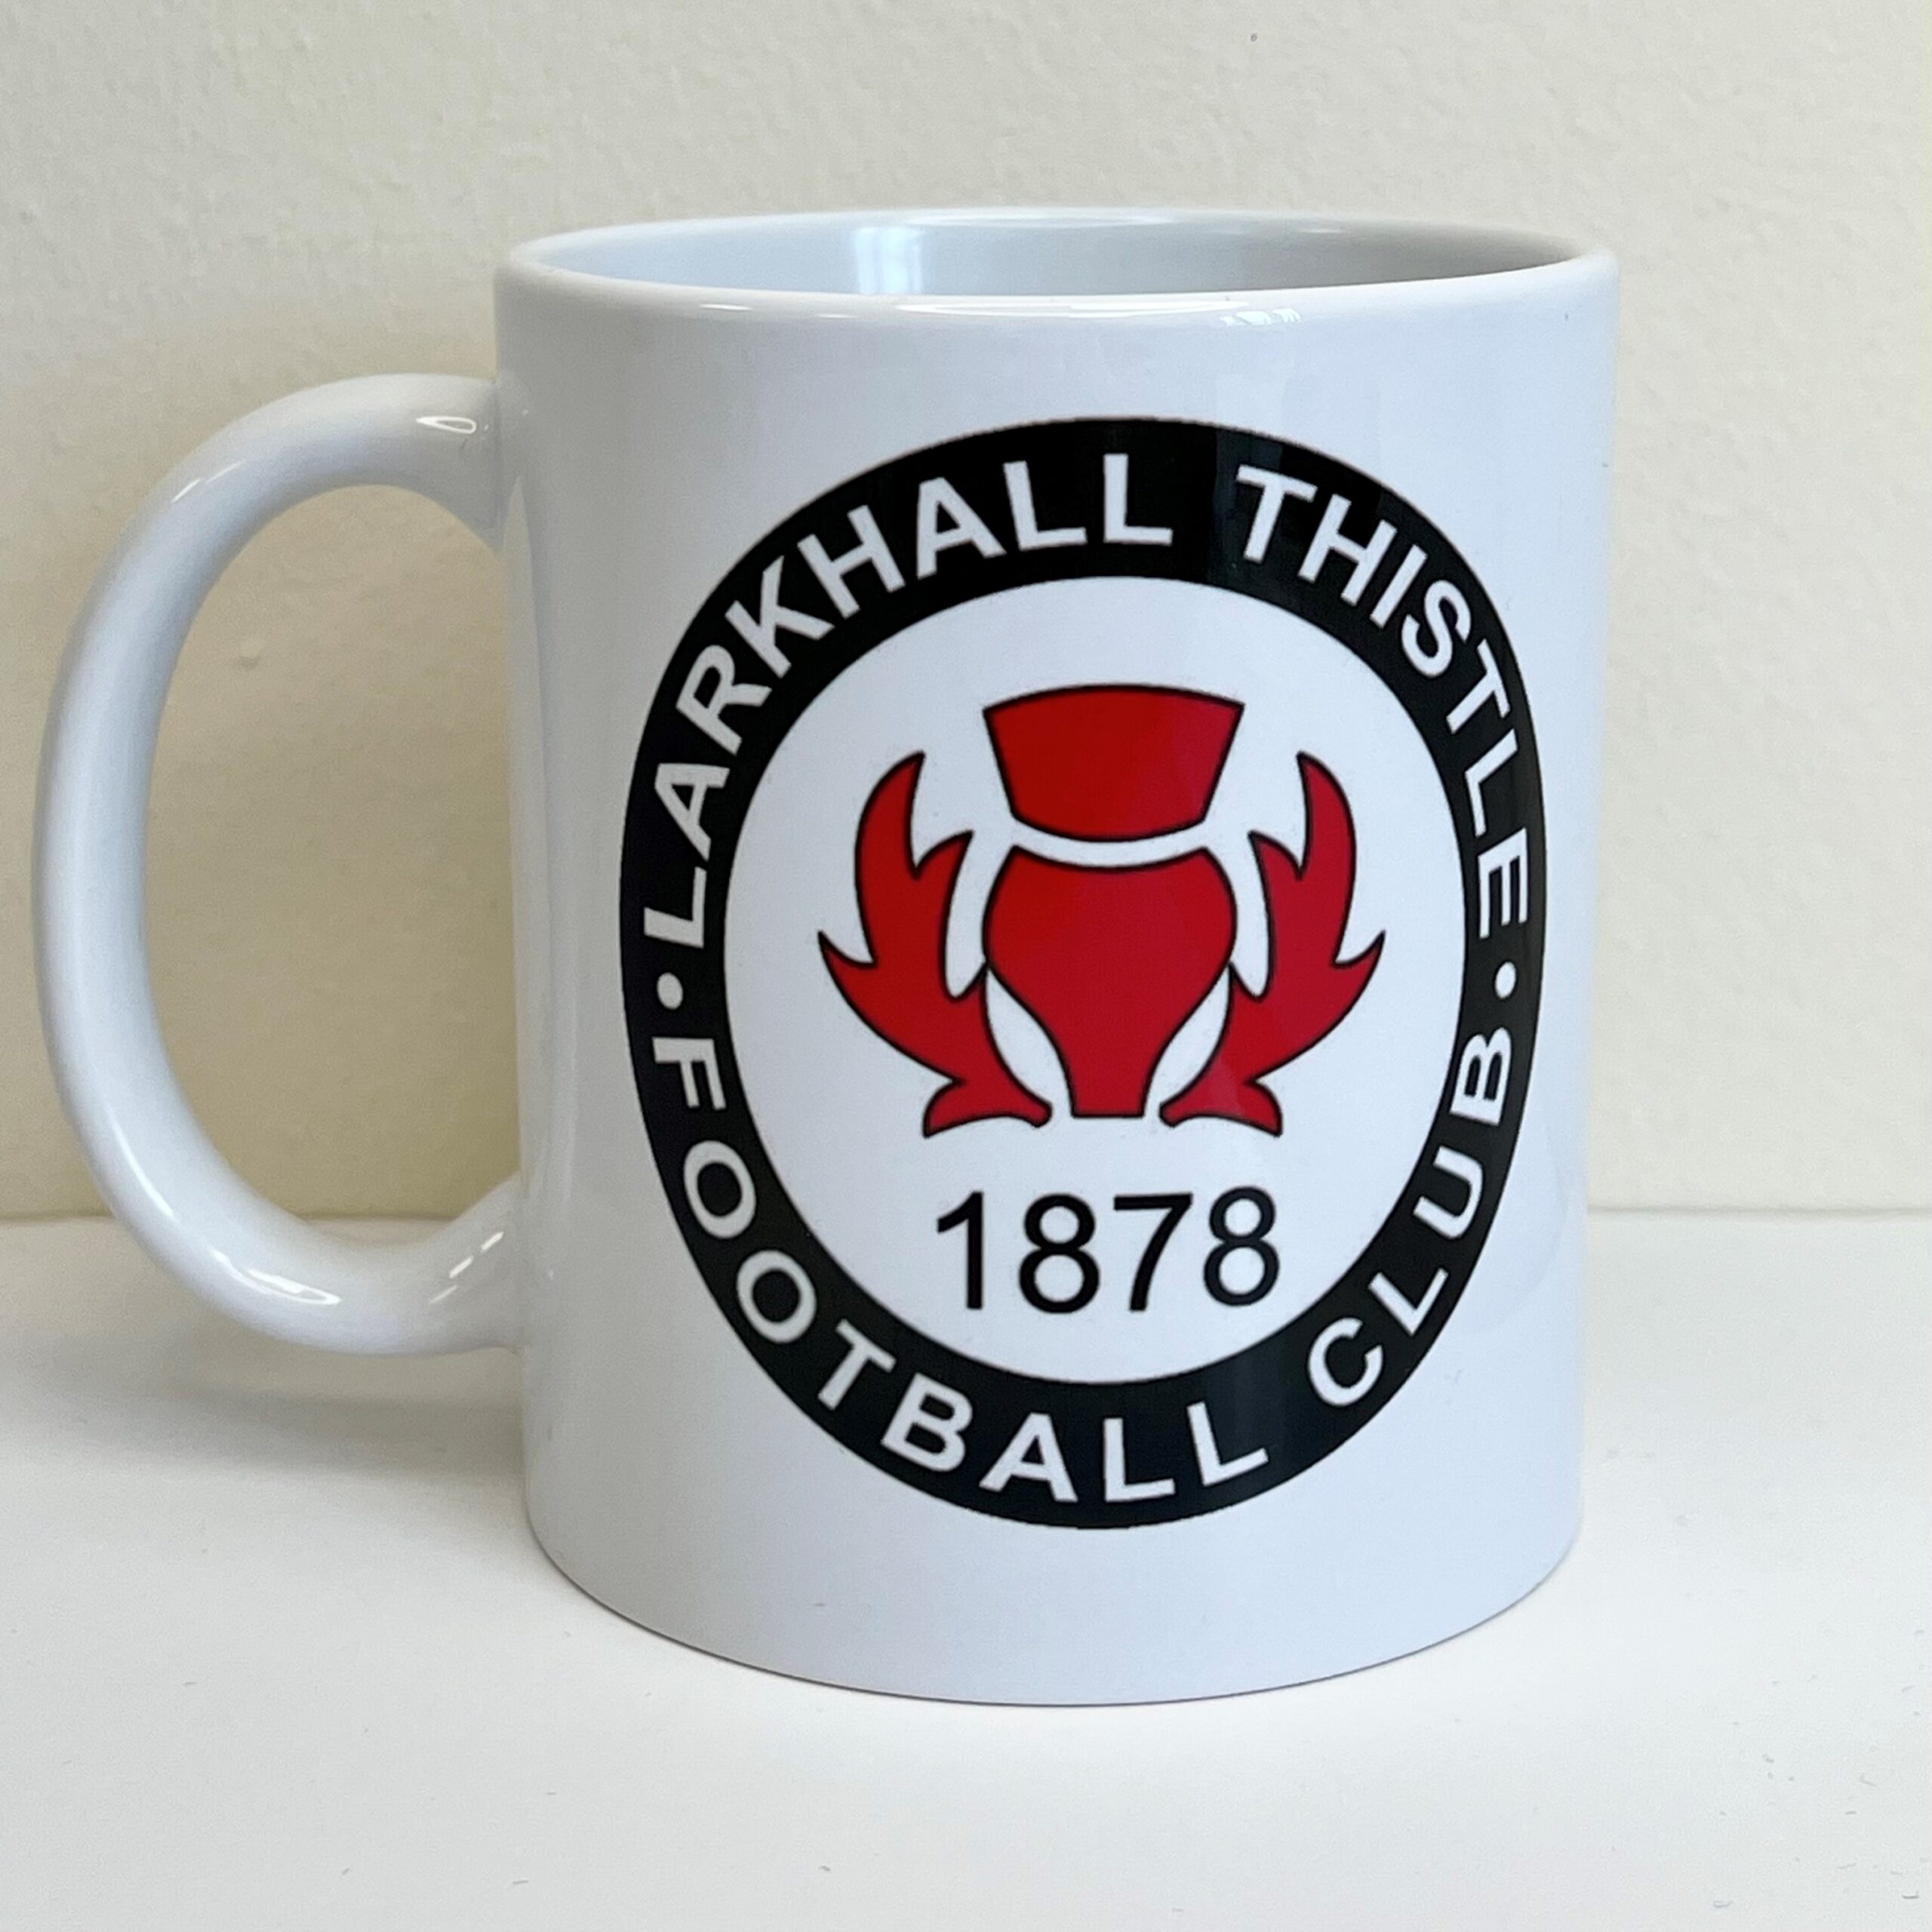 larkhall thistle FC mug